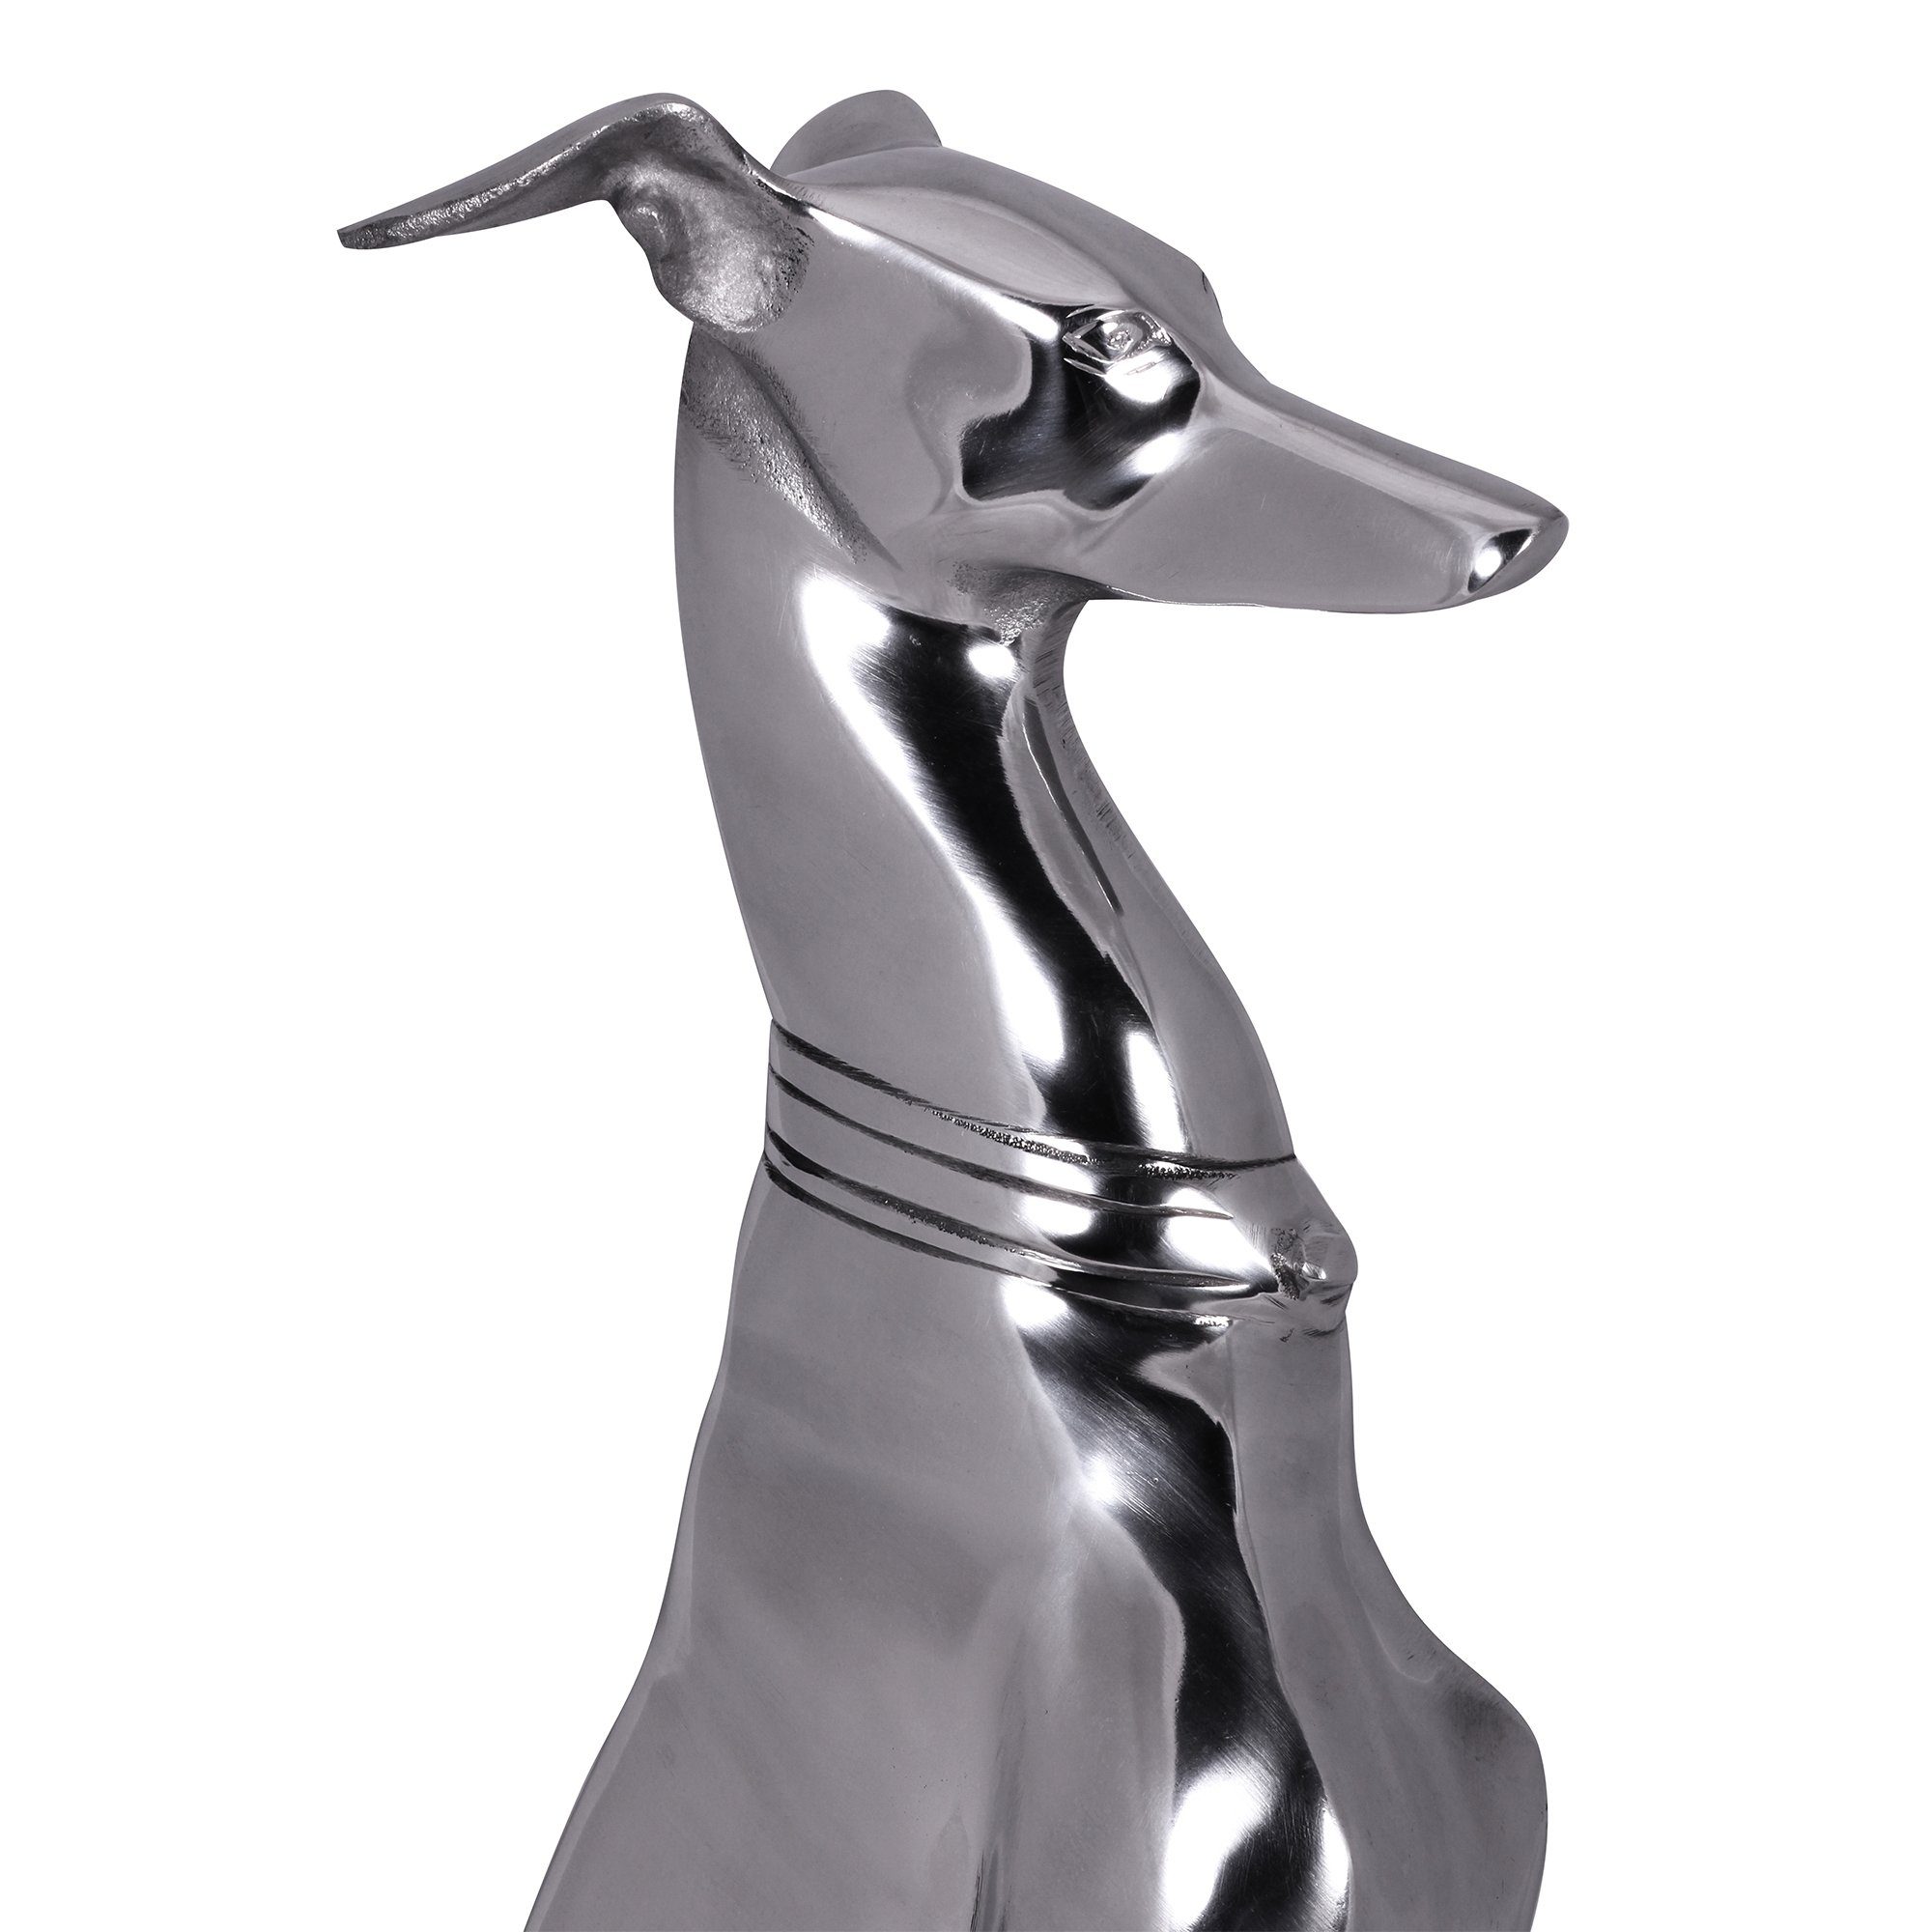 Tierfigur Metall Dekoration Modern), Hundefigur Skulptur Aluminium 18x70x25cm (Windhund Hundestatue Silber FINEBUY FB37863 Groß,